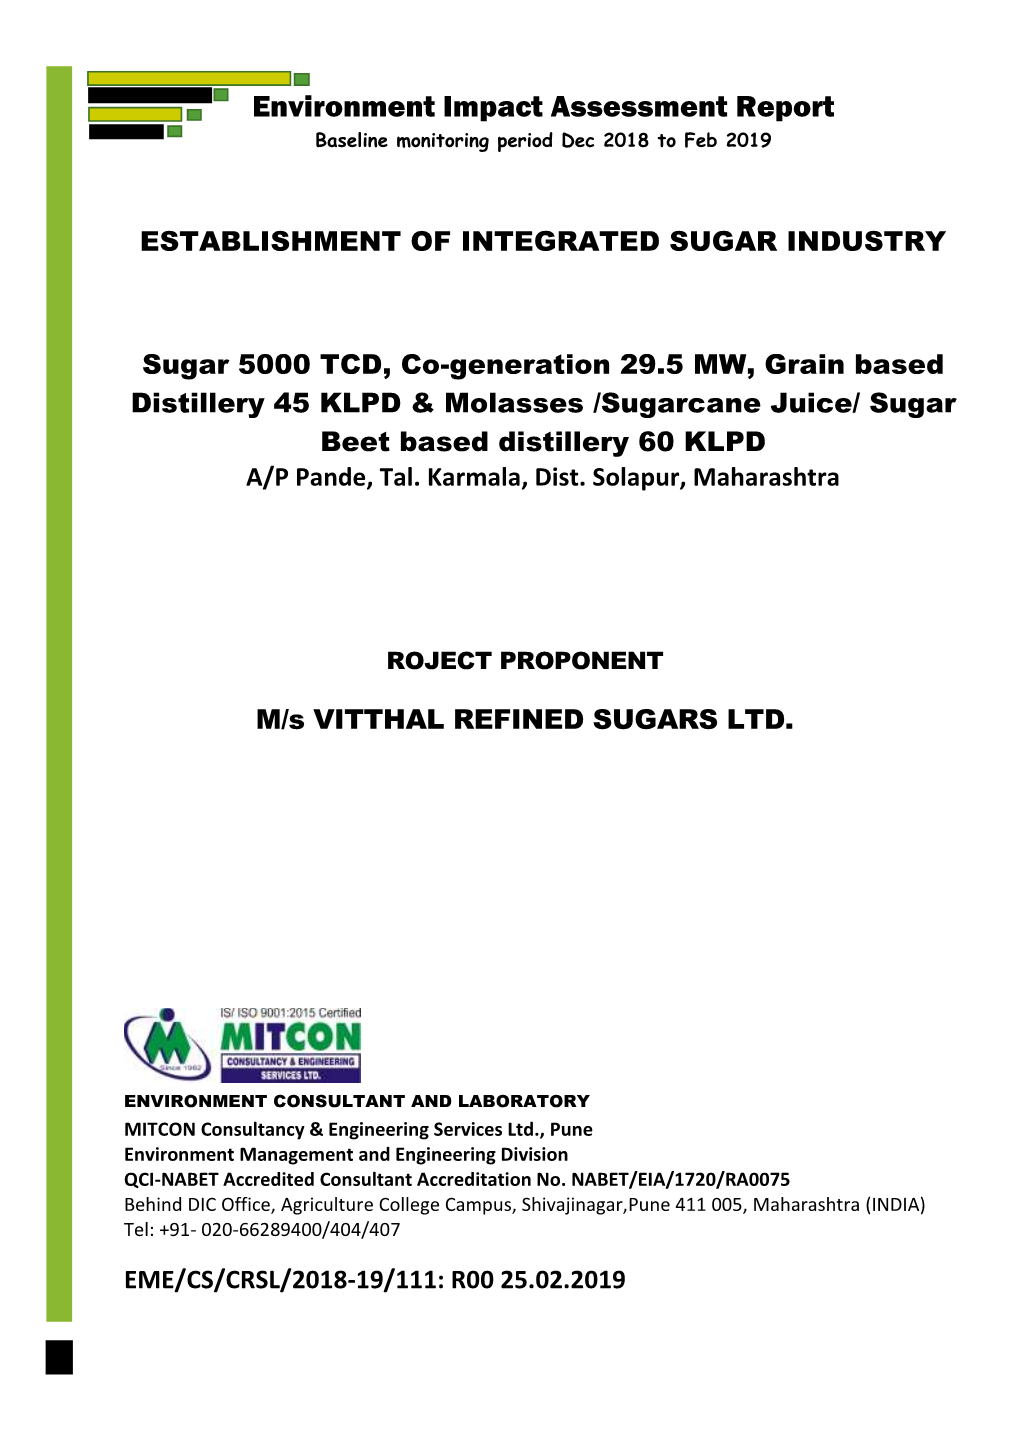 Environmental Impact Assessment Report Vitthal Refined Sugars Ltd